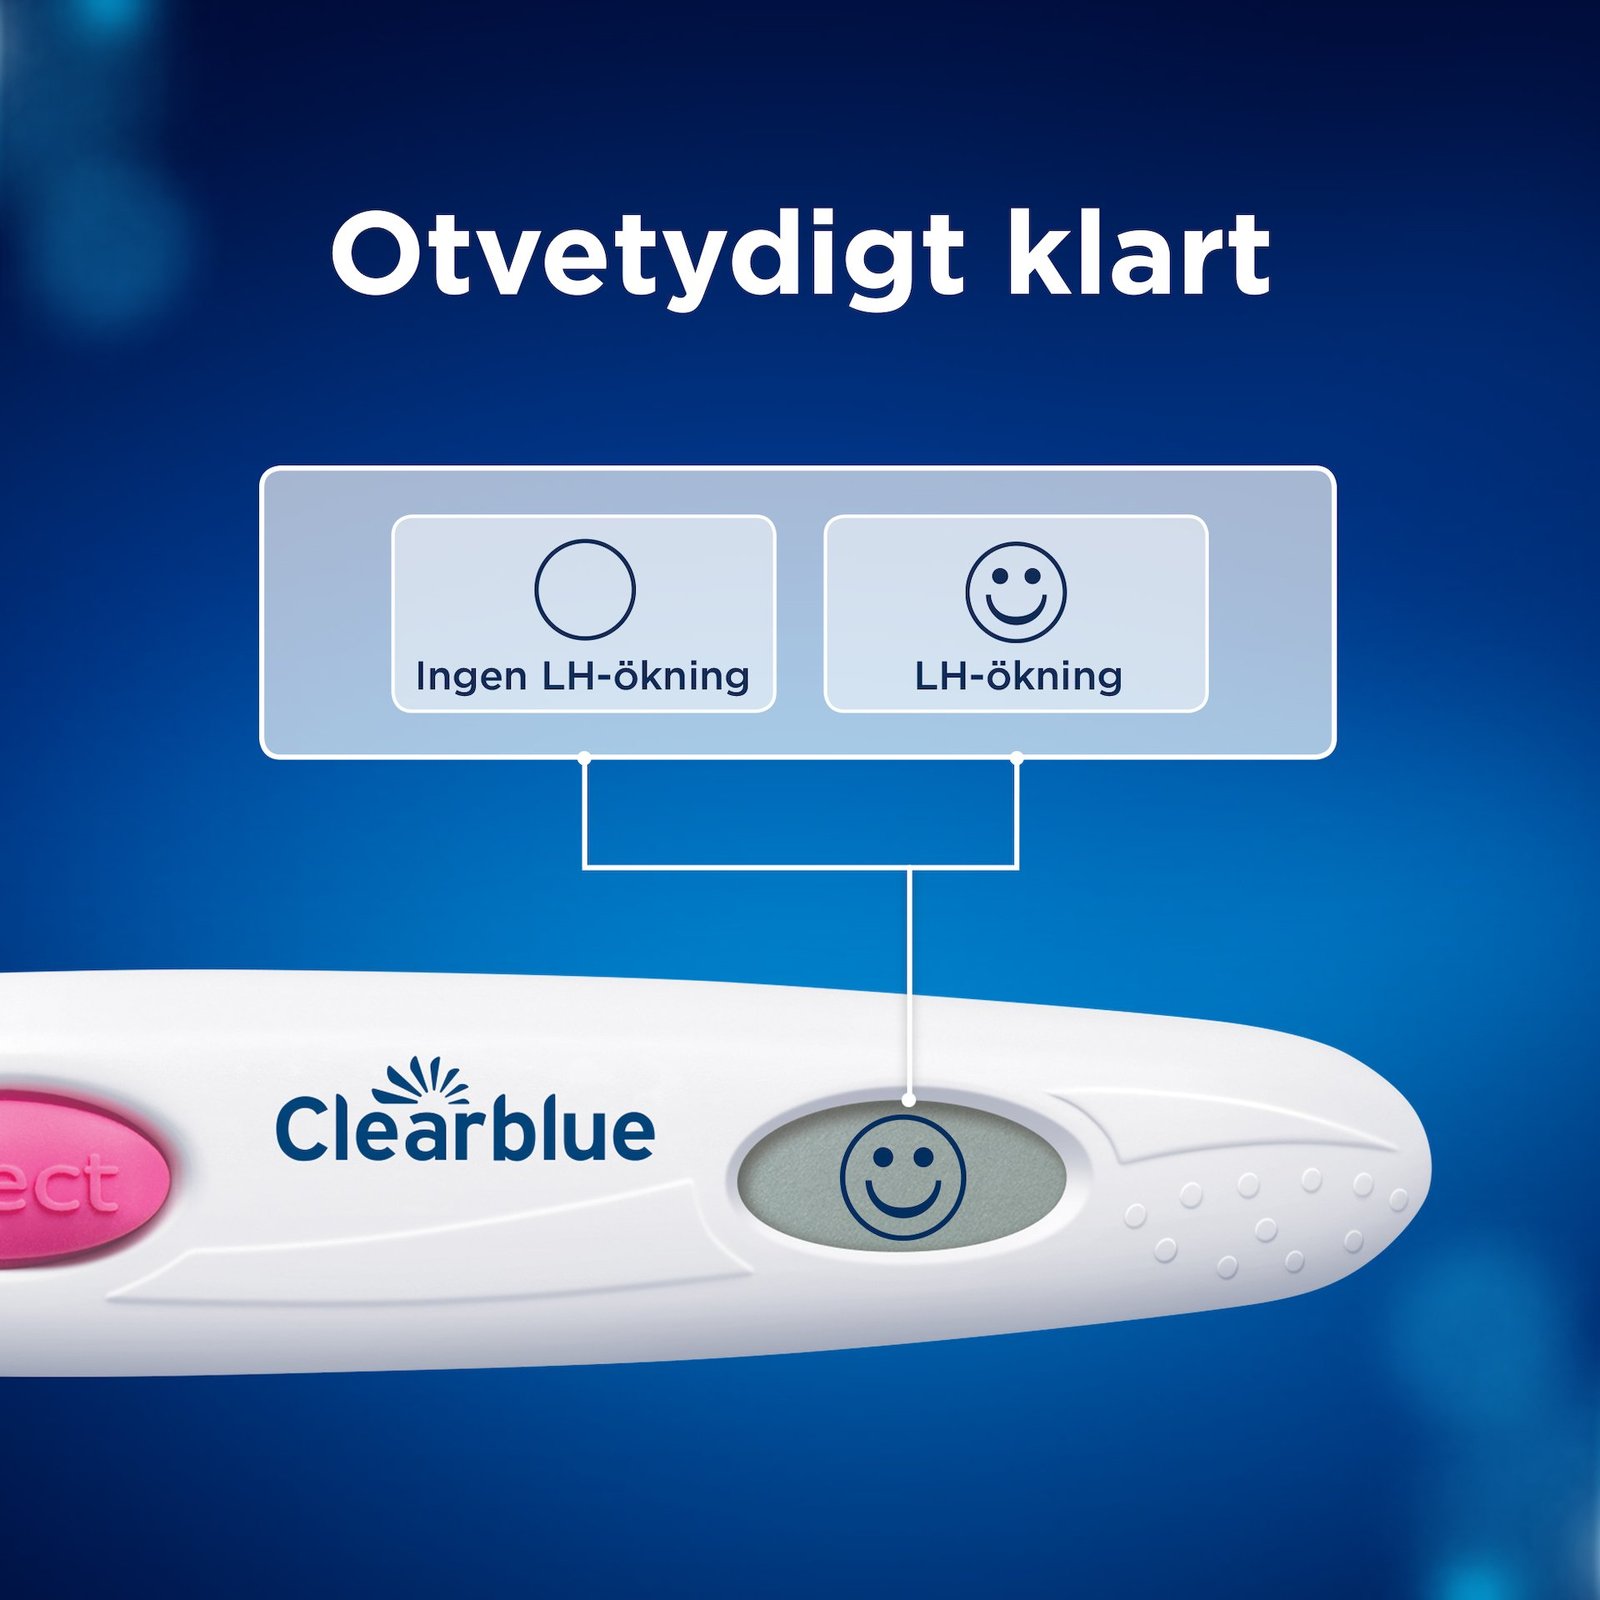 Clearblue Digitalt Ägglossningstest 1 Hållare & 10 tester